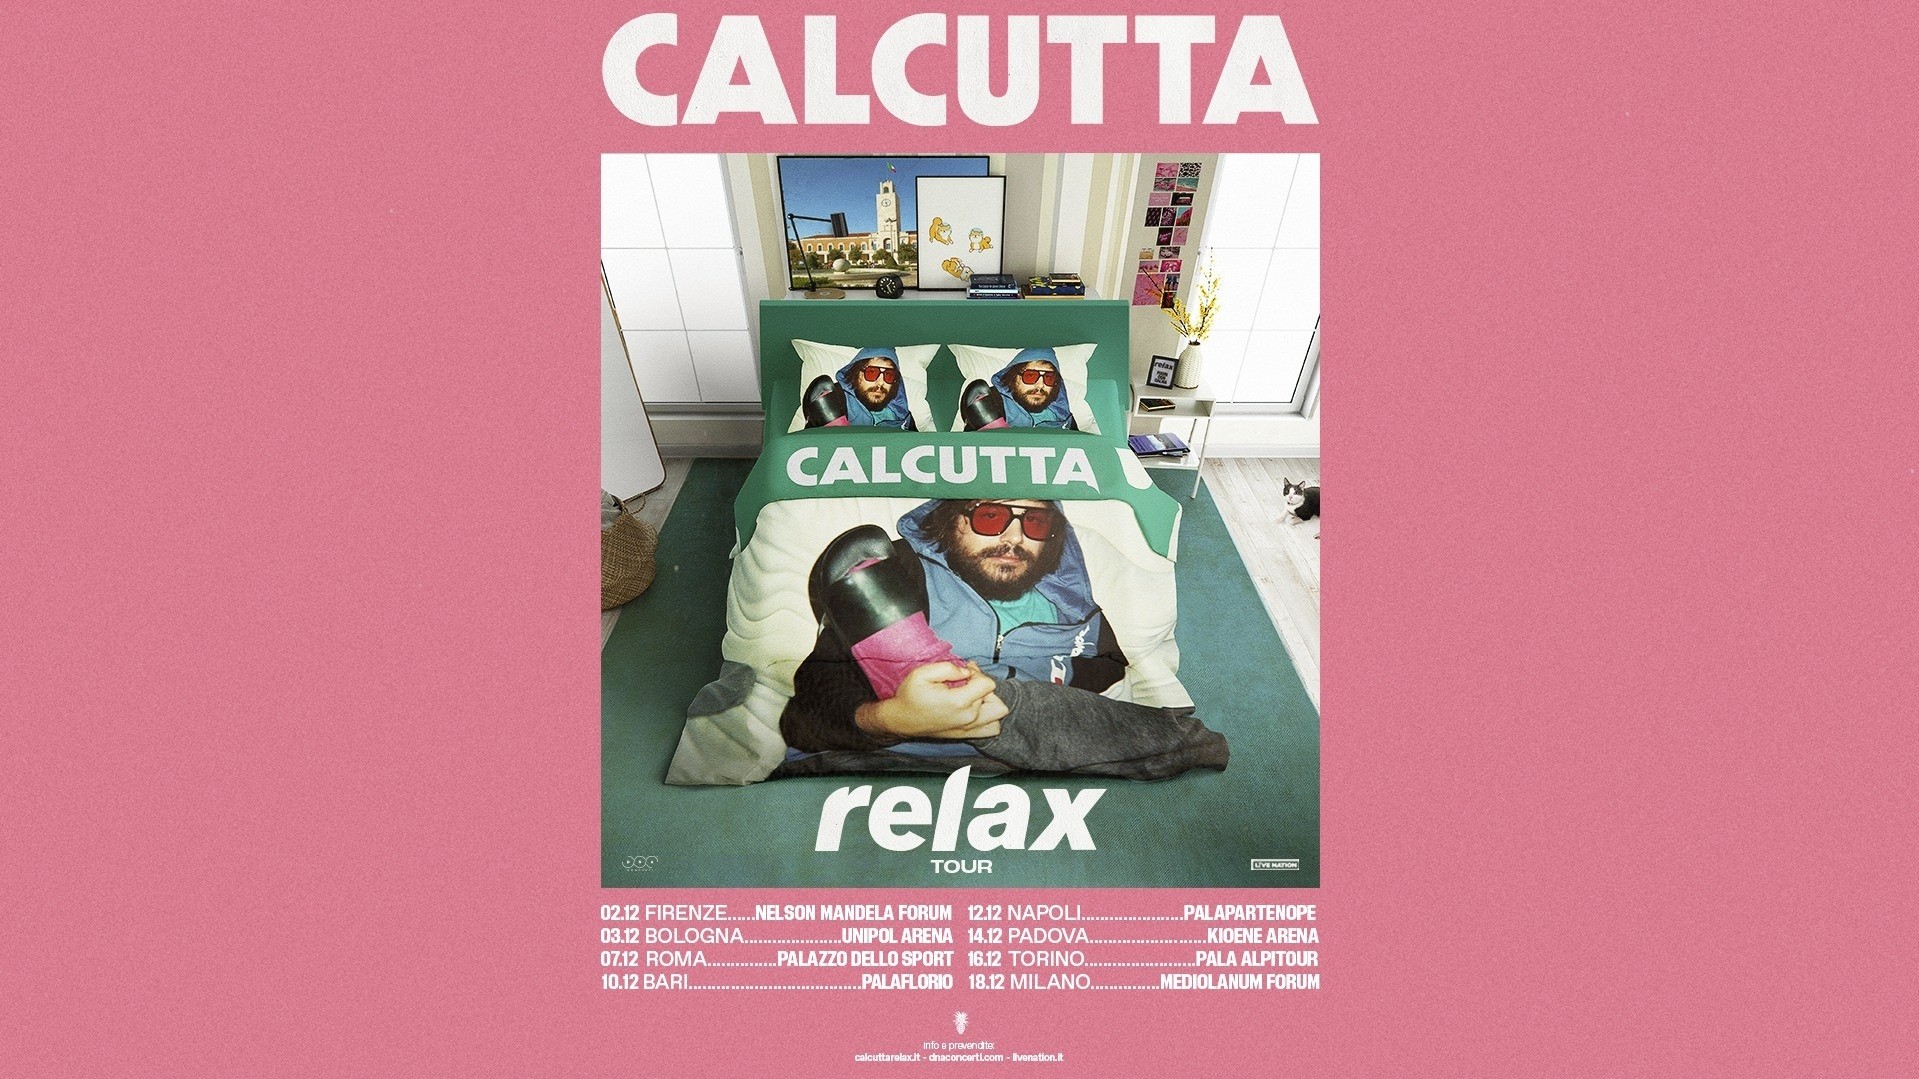 Calcutta - "Relax Tour"